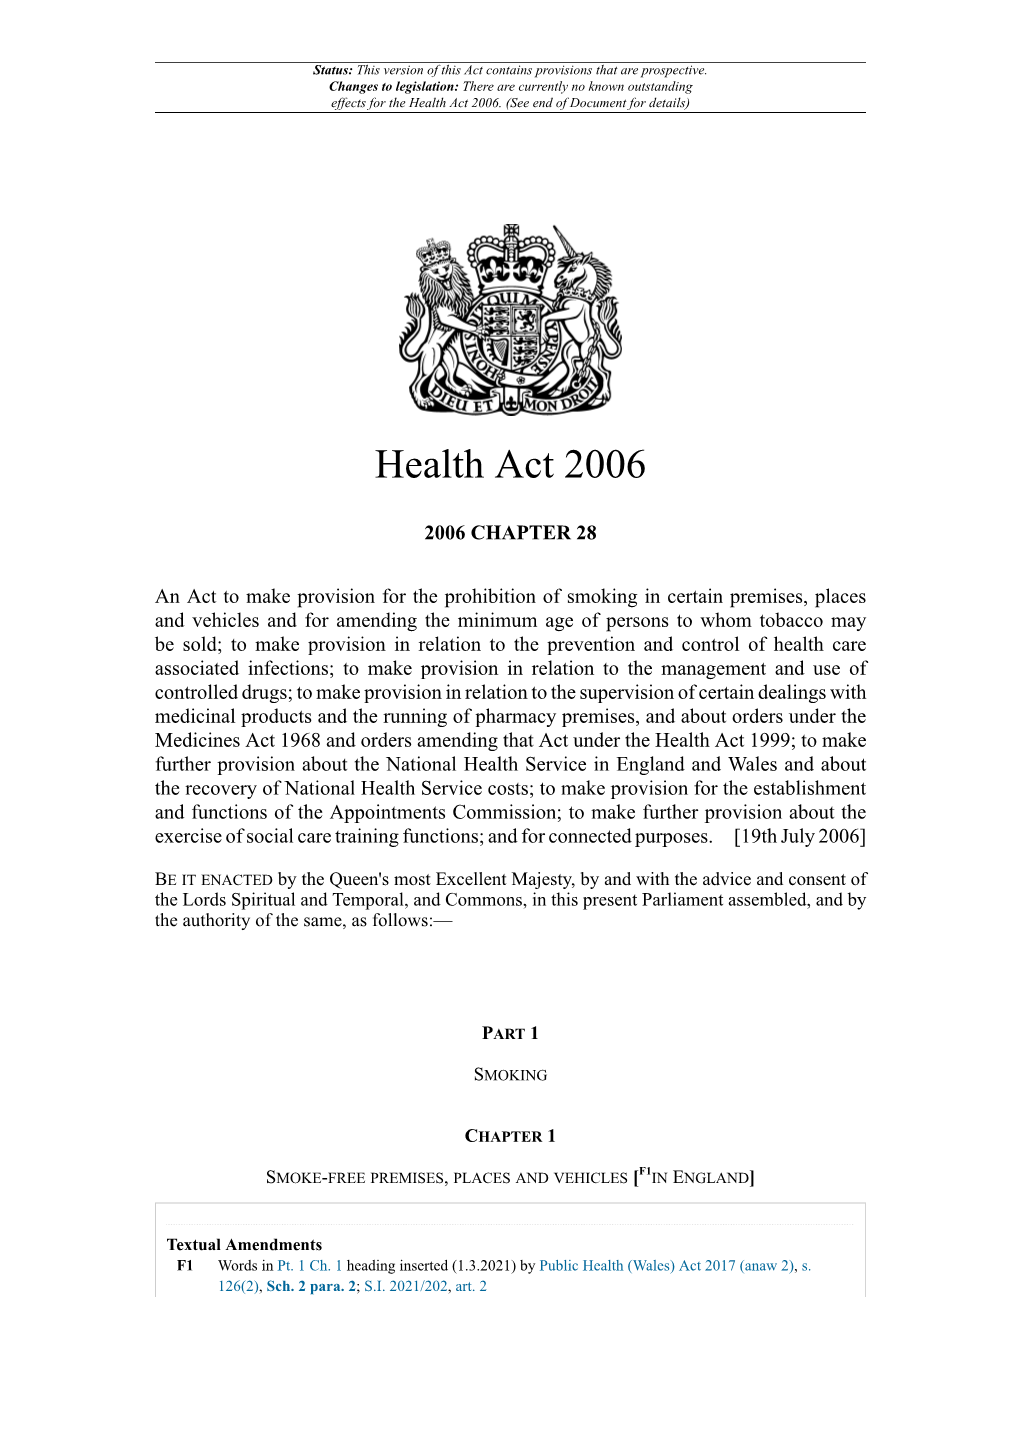 Health Act 2006